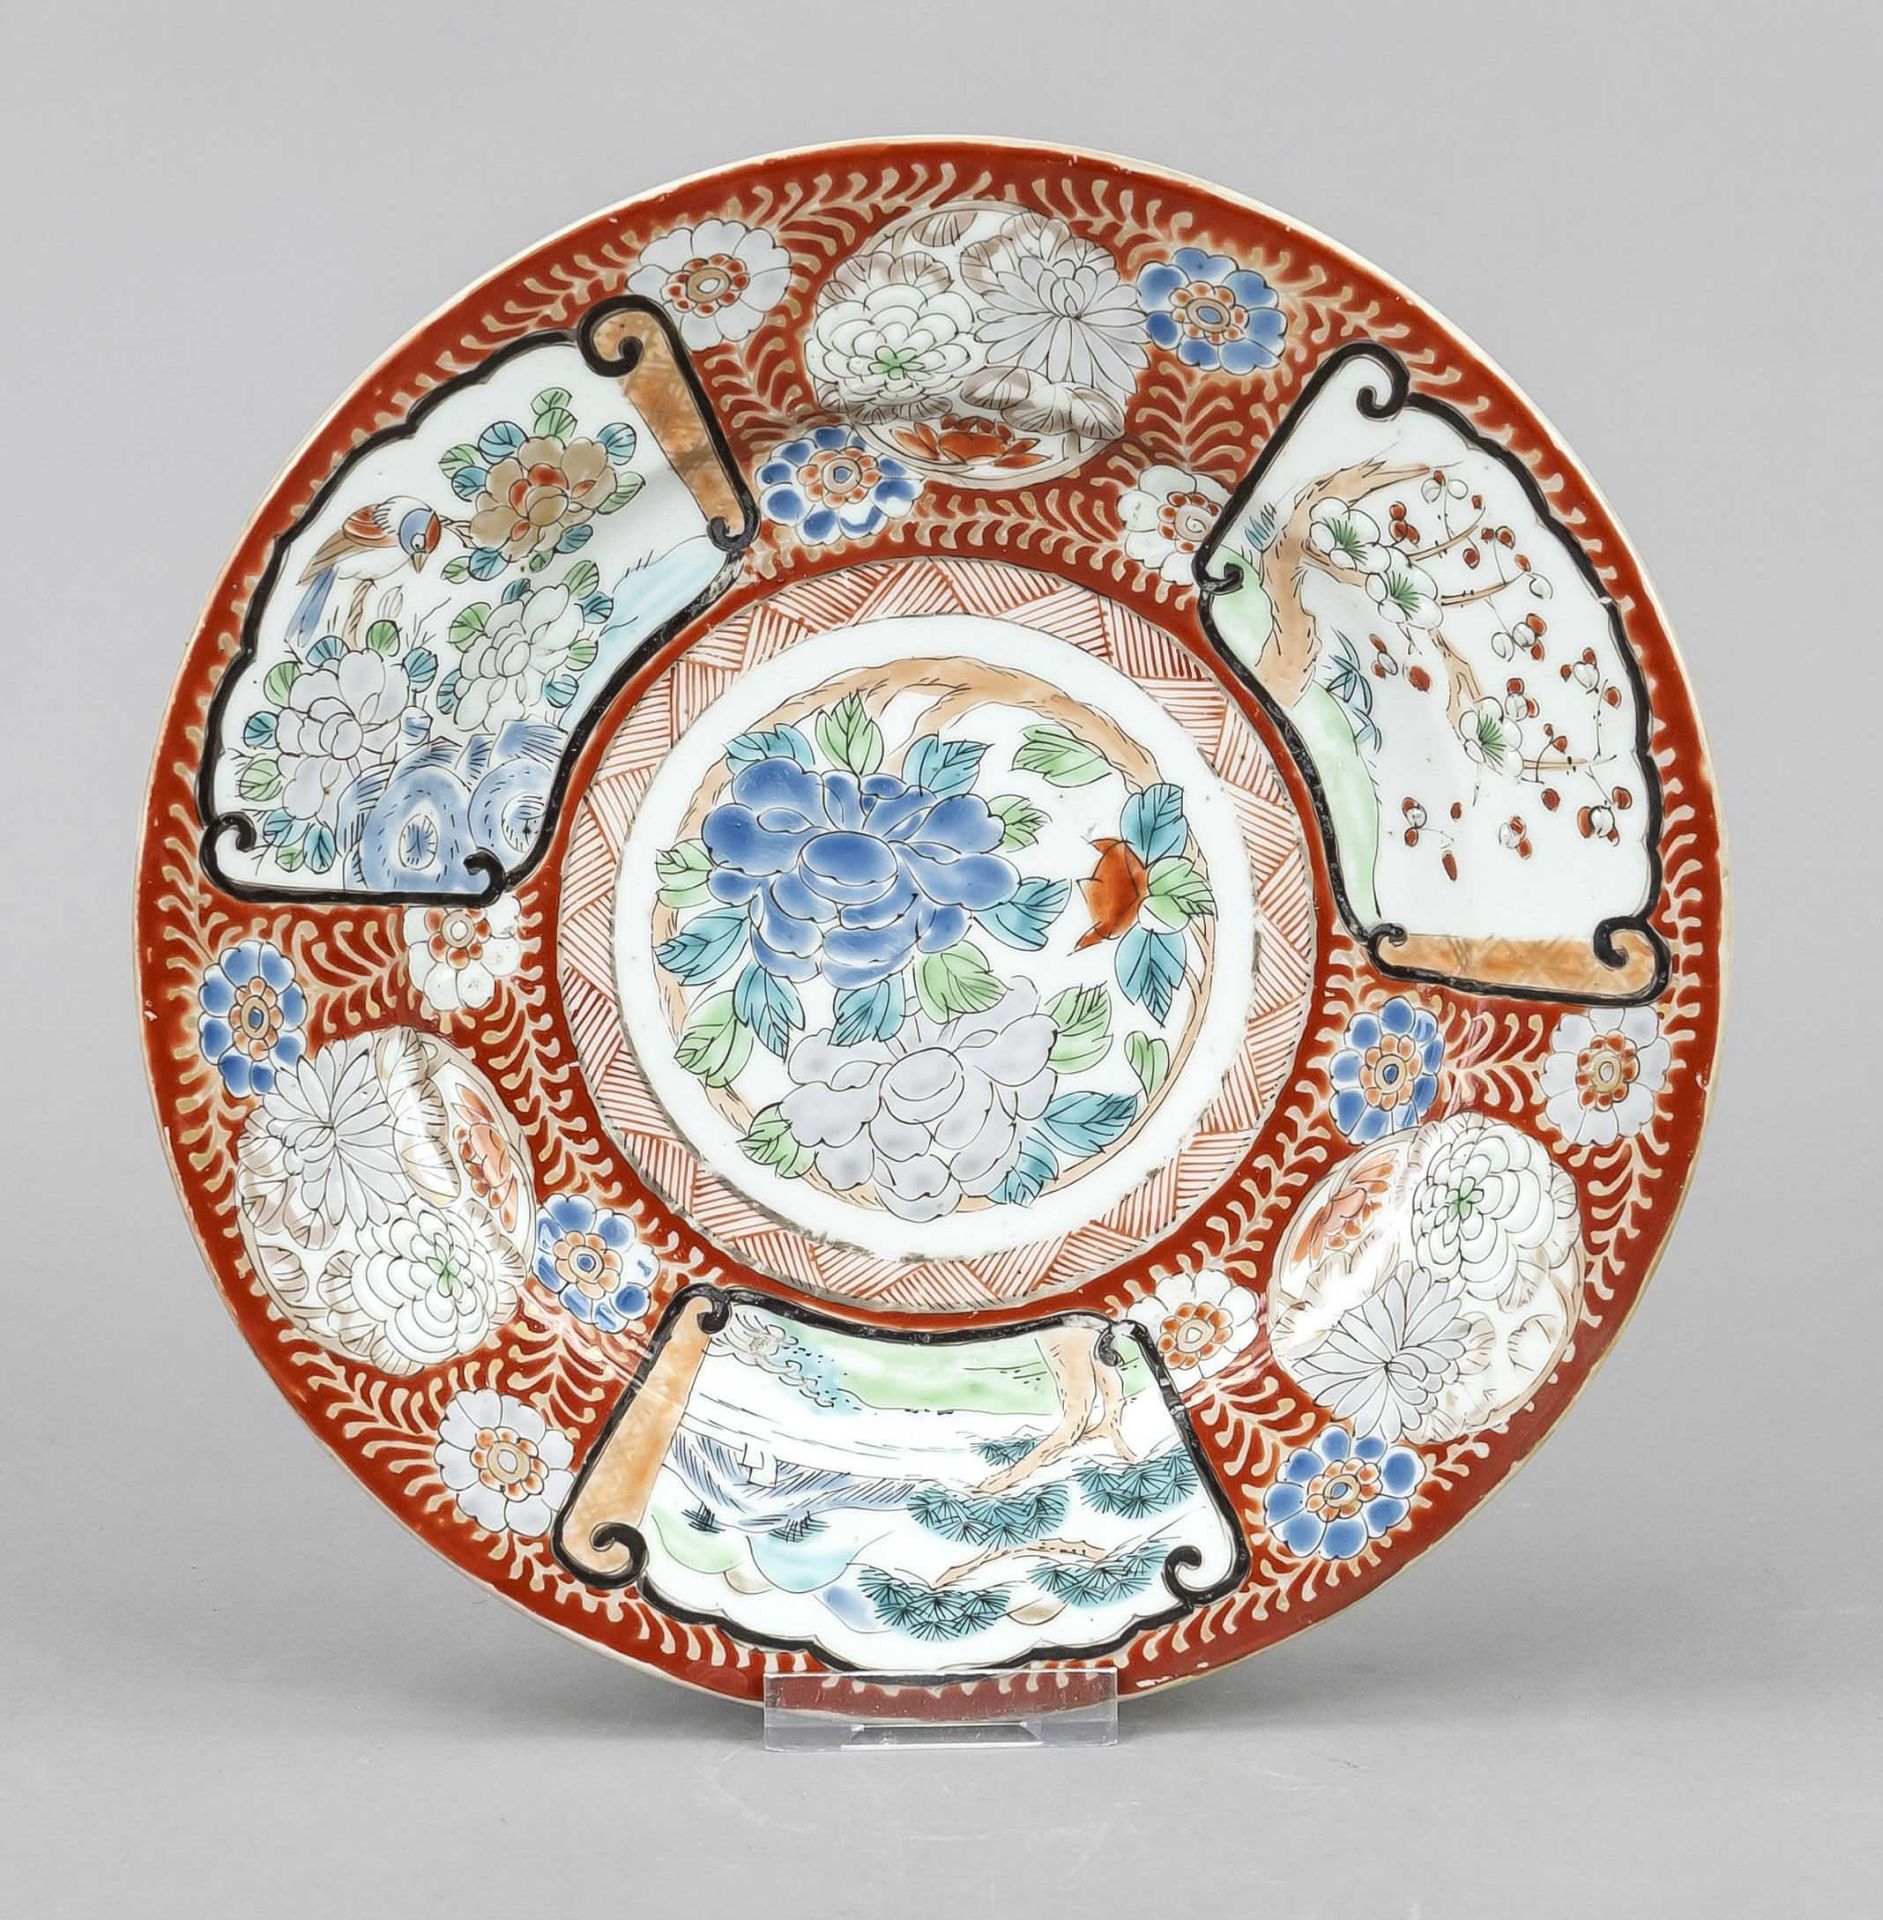 Kutani plate Karakusa, Japan, Meiji period (1868-1912), 19th century, porcelain with polychrome